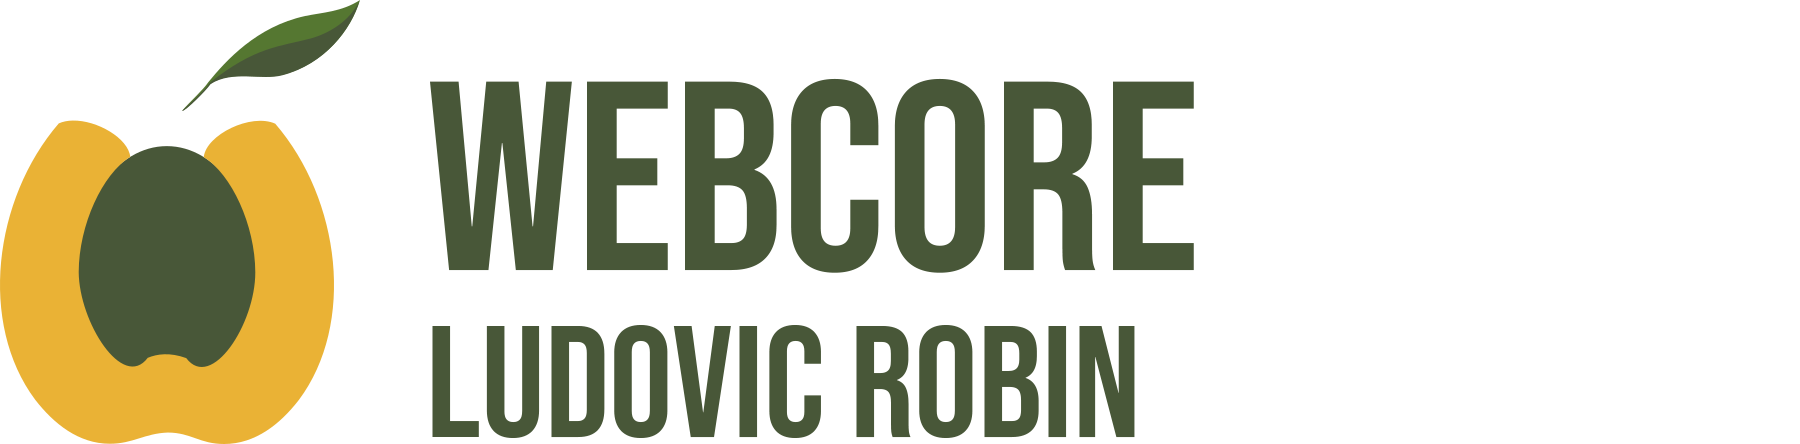 logo webcore